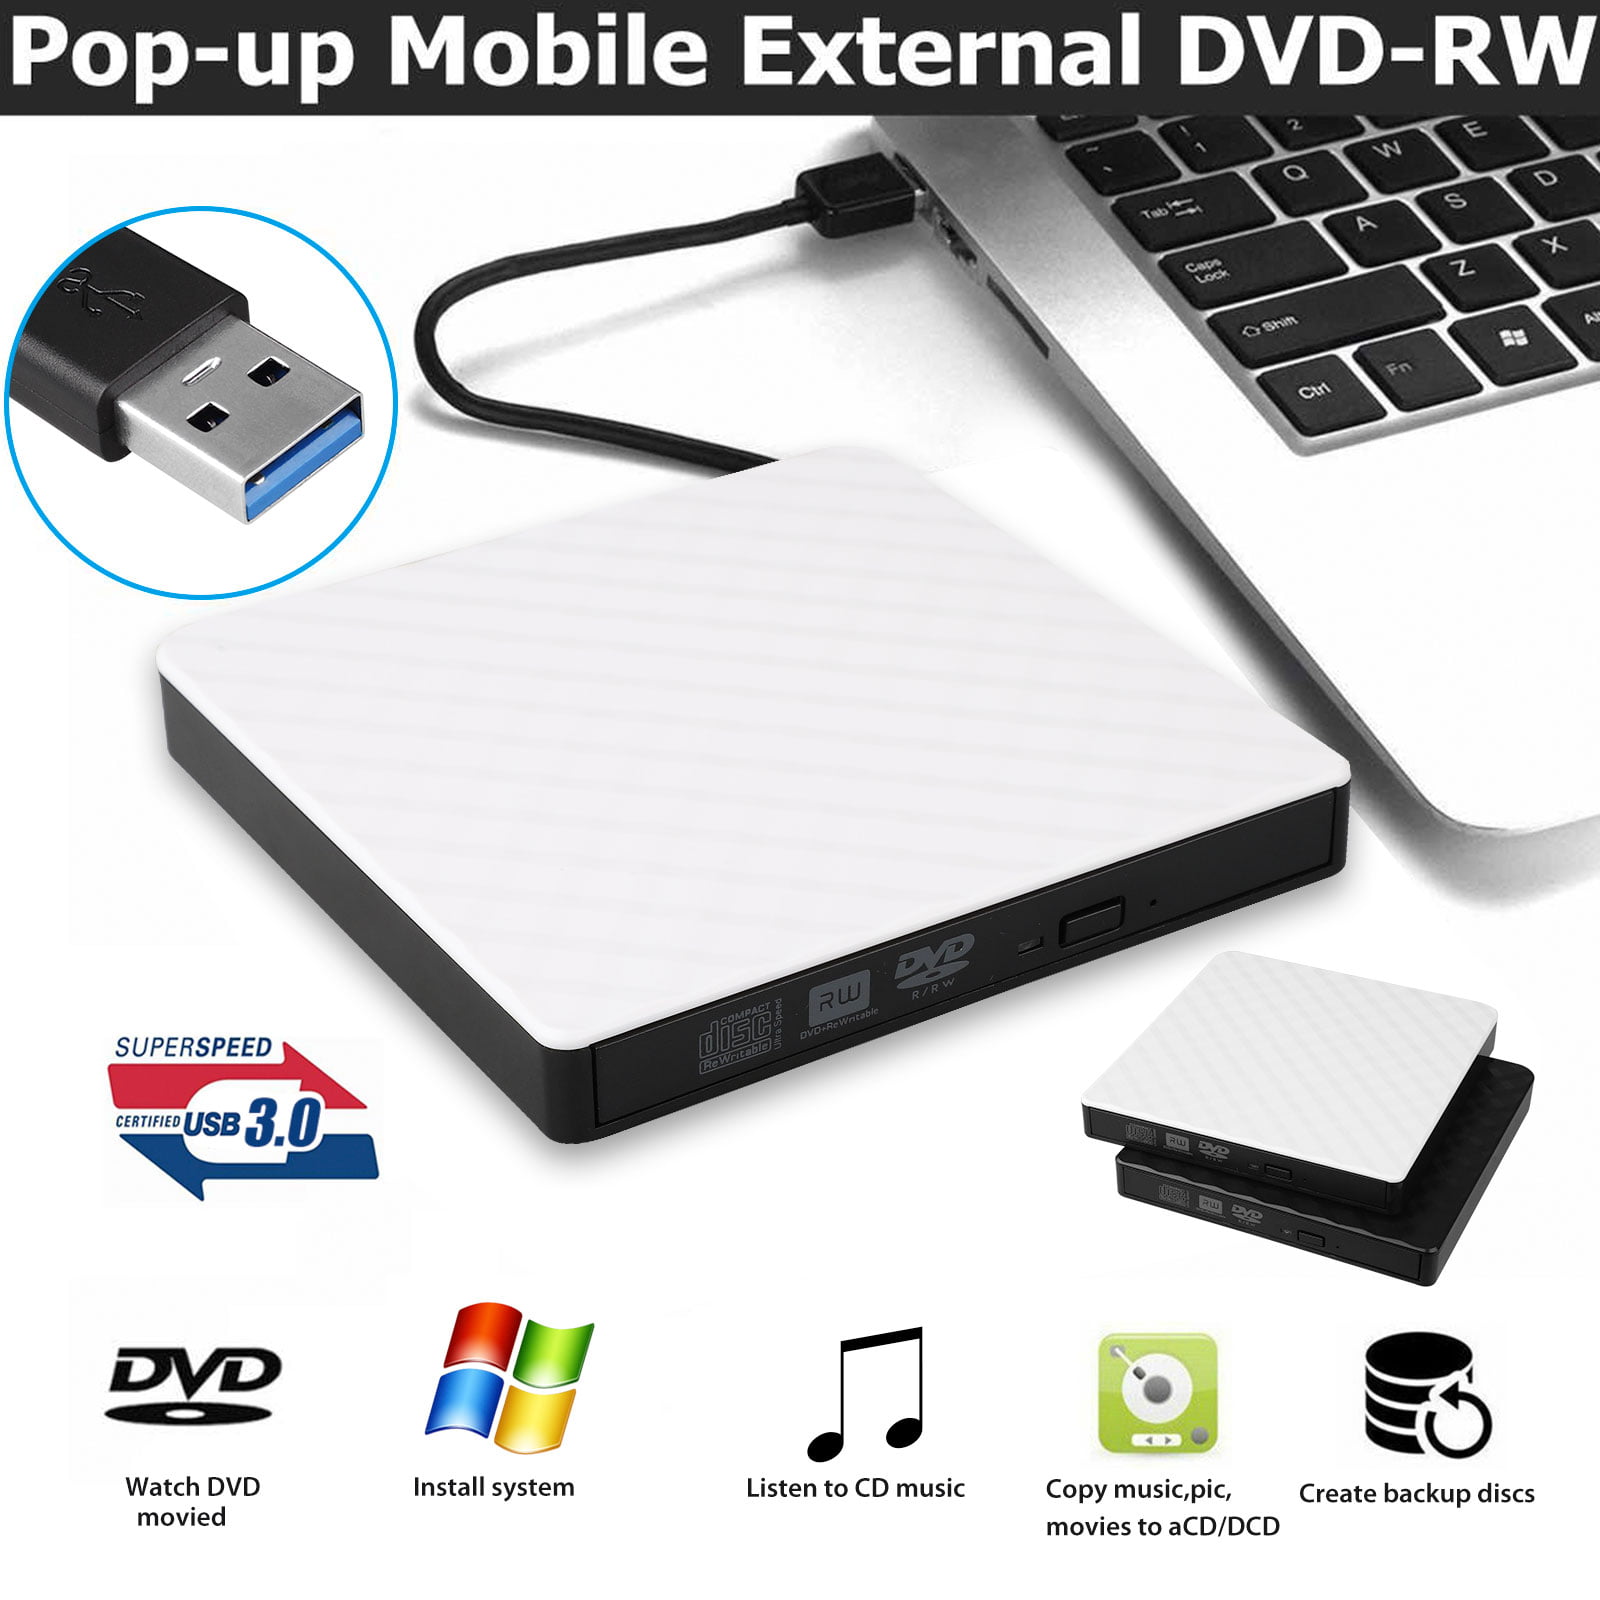 TSV USB 3.0 External DVD Drive, Slim Portable External DVD/CD Rewriter Burner Drive High Speed Data Transfer for Laptop, Notebook, Desktoop